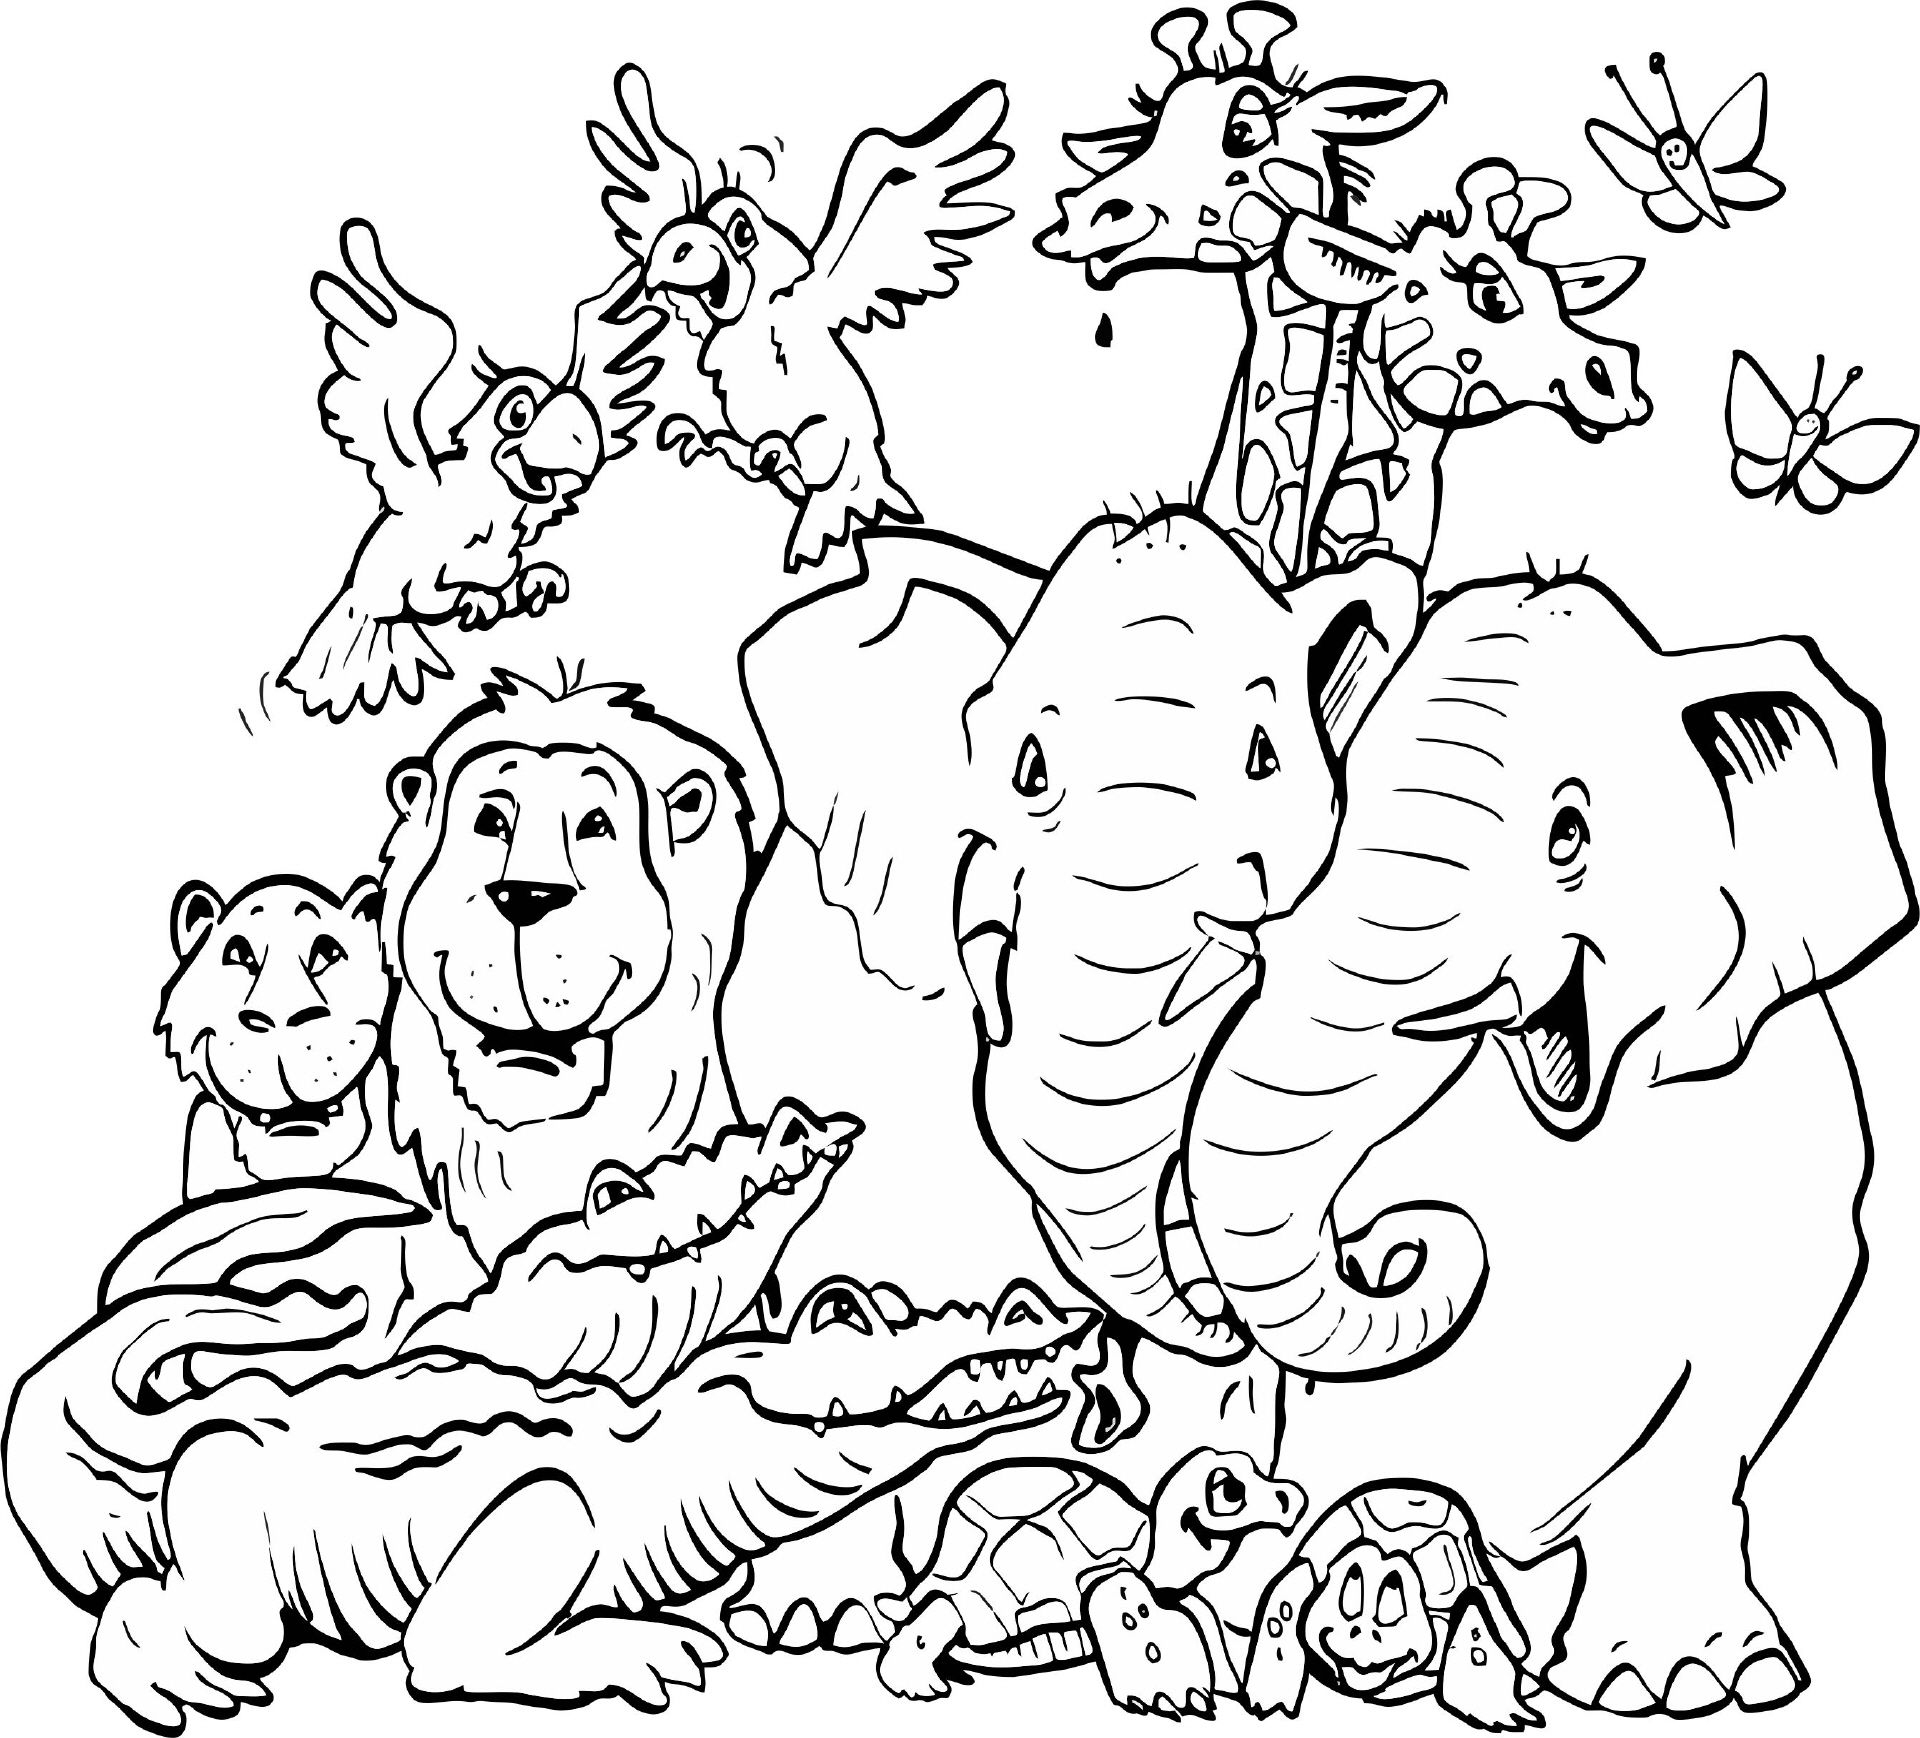 Elefanten | Coloring For Kids, Coloring Pages, Bible Class in Ausmalbilder Elefant